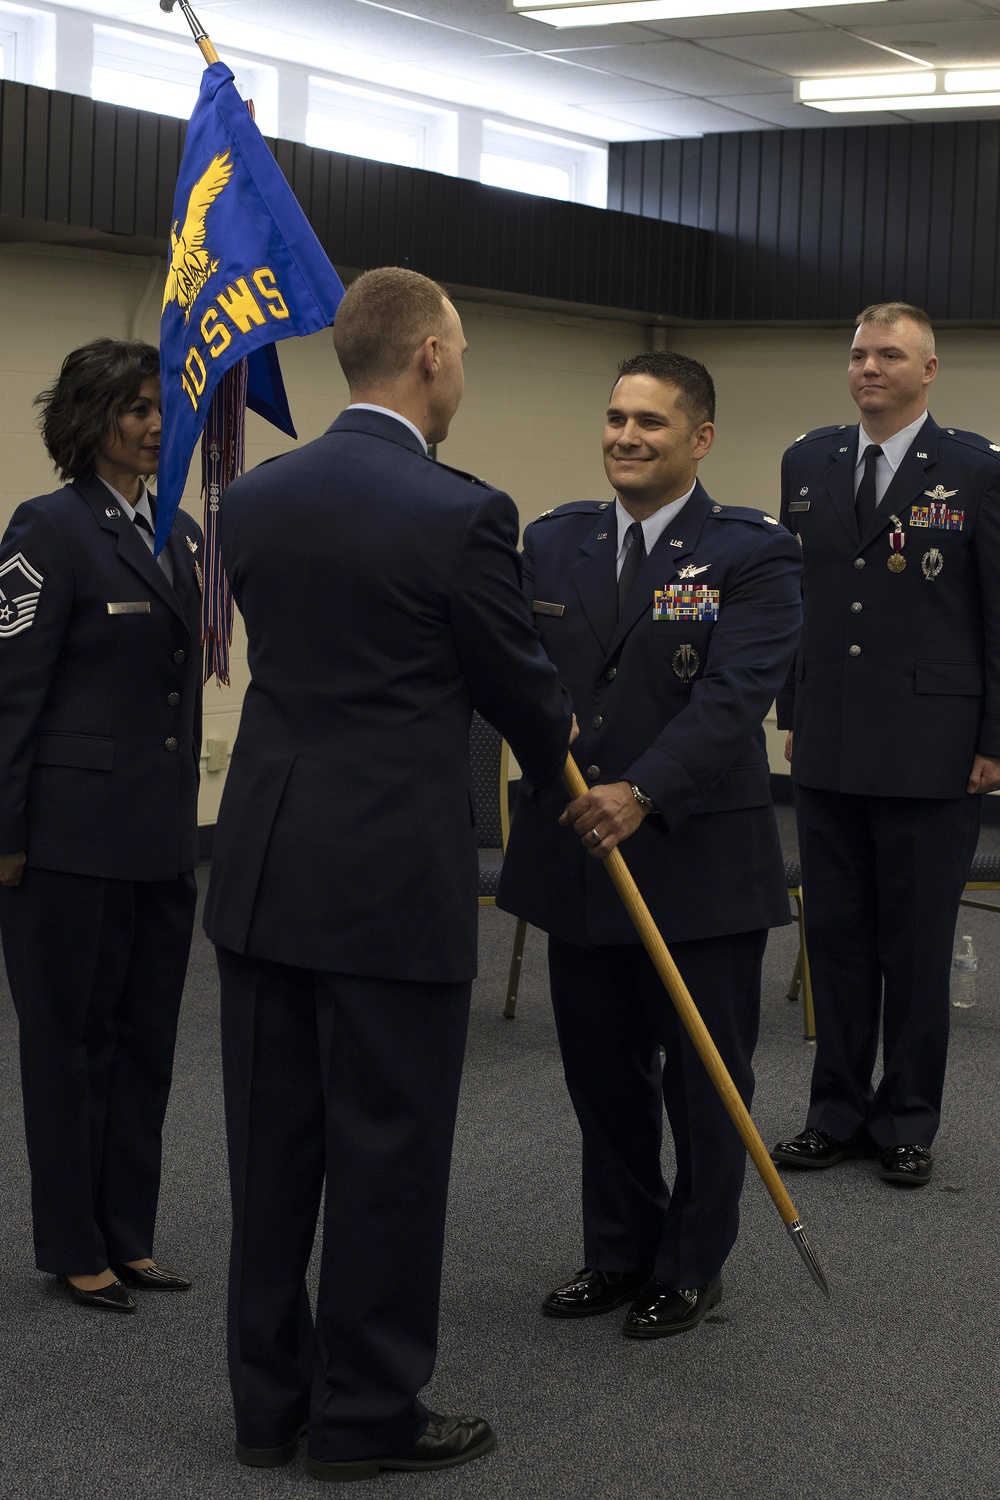 Cavalier AFS receives new commander